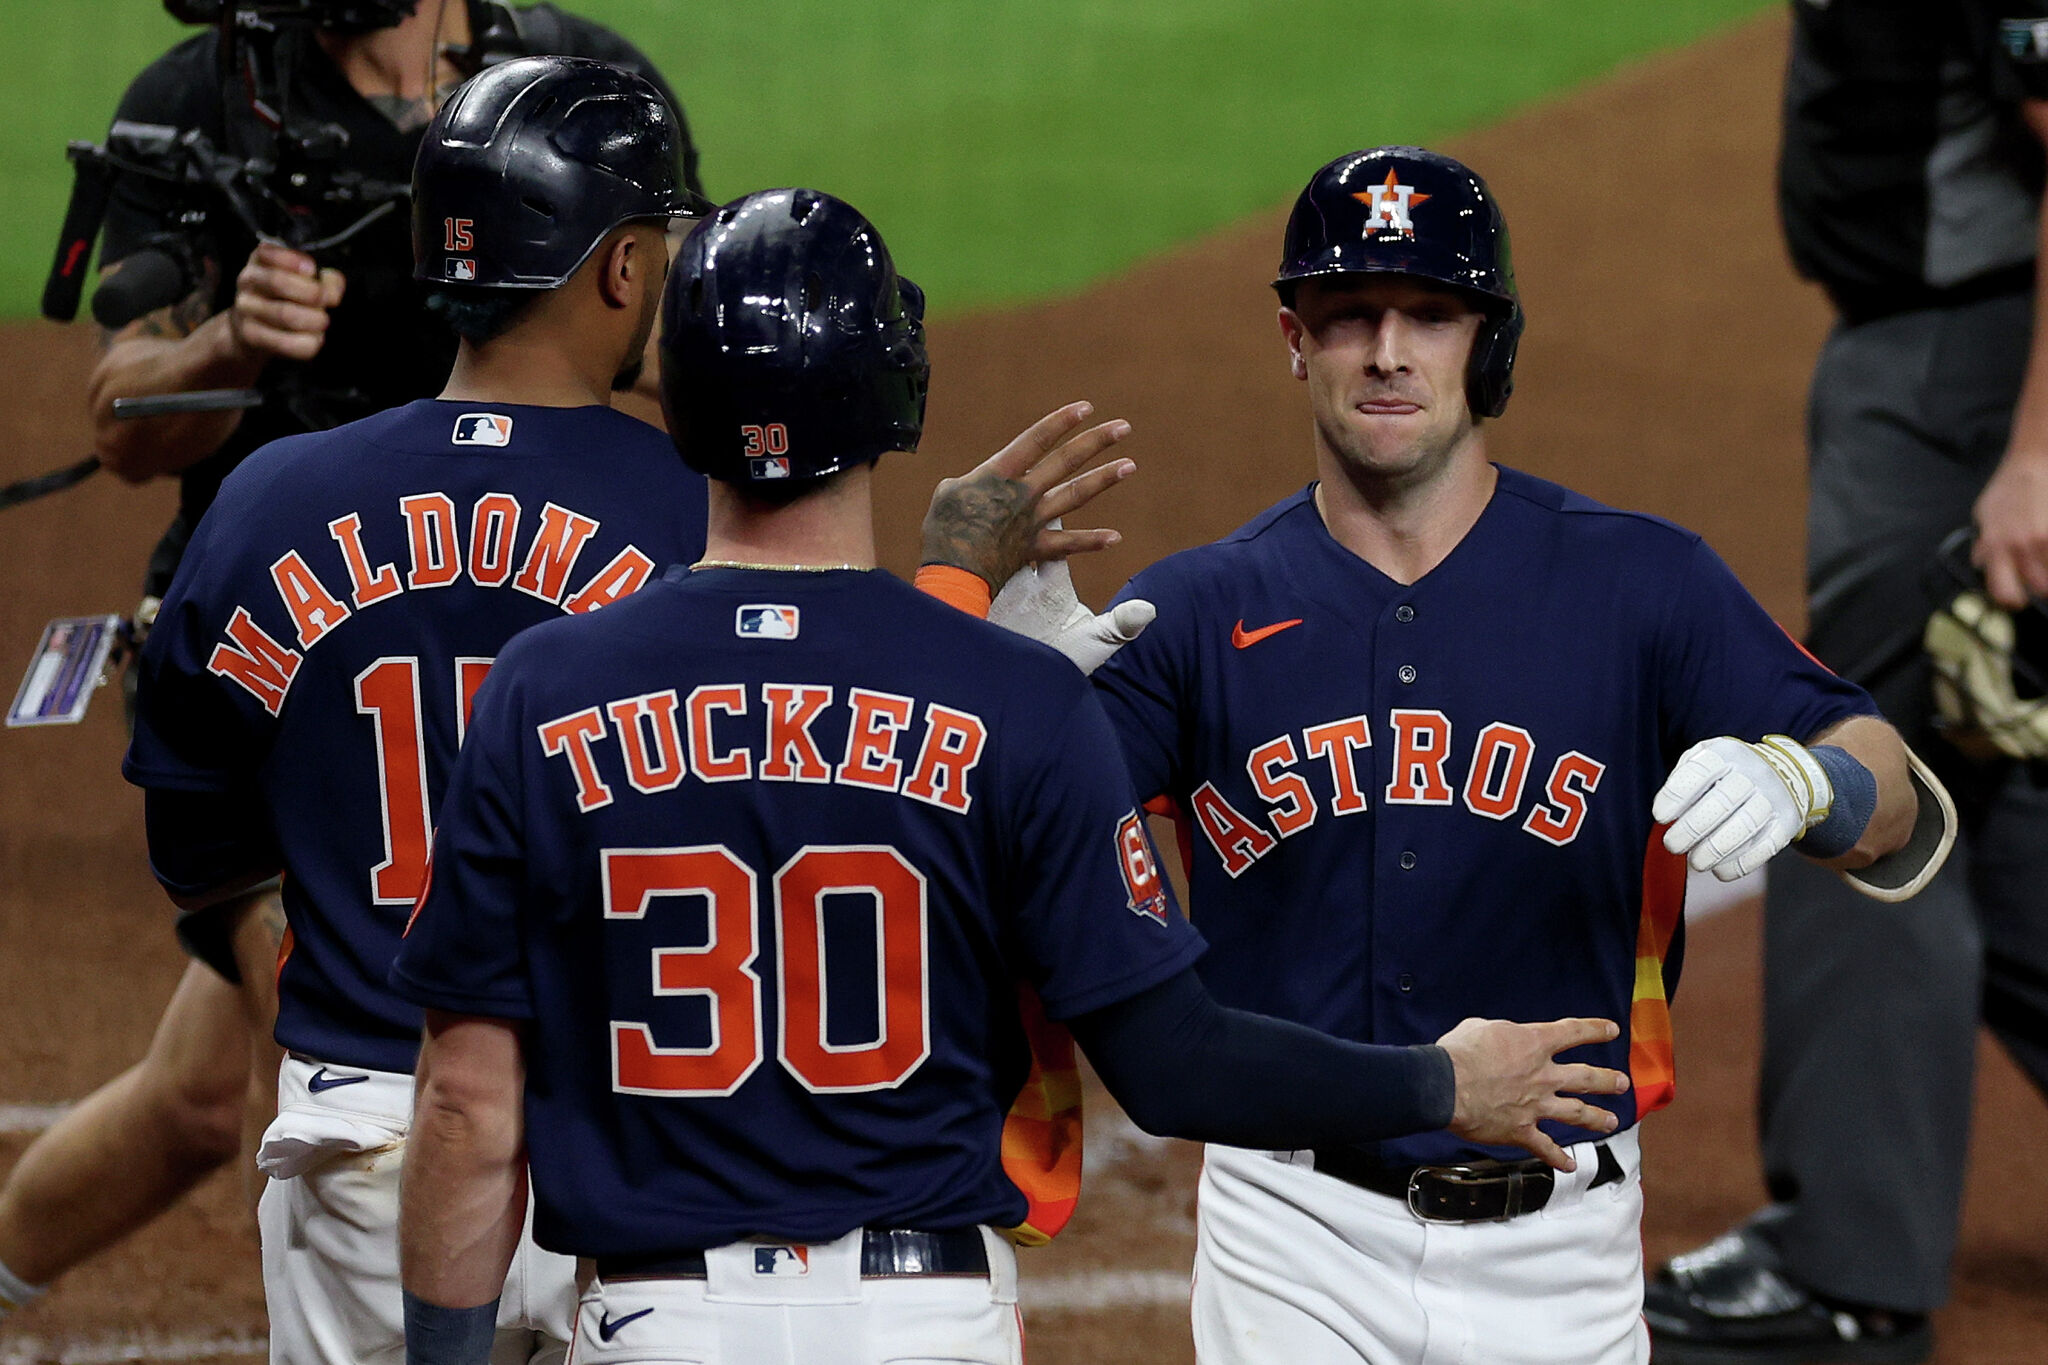 Astros vs. Yankees score: Alex Bregman's three-run HR gives